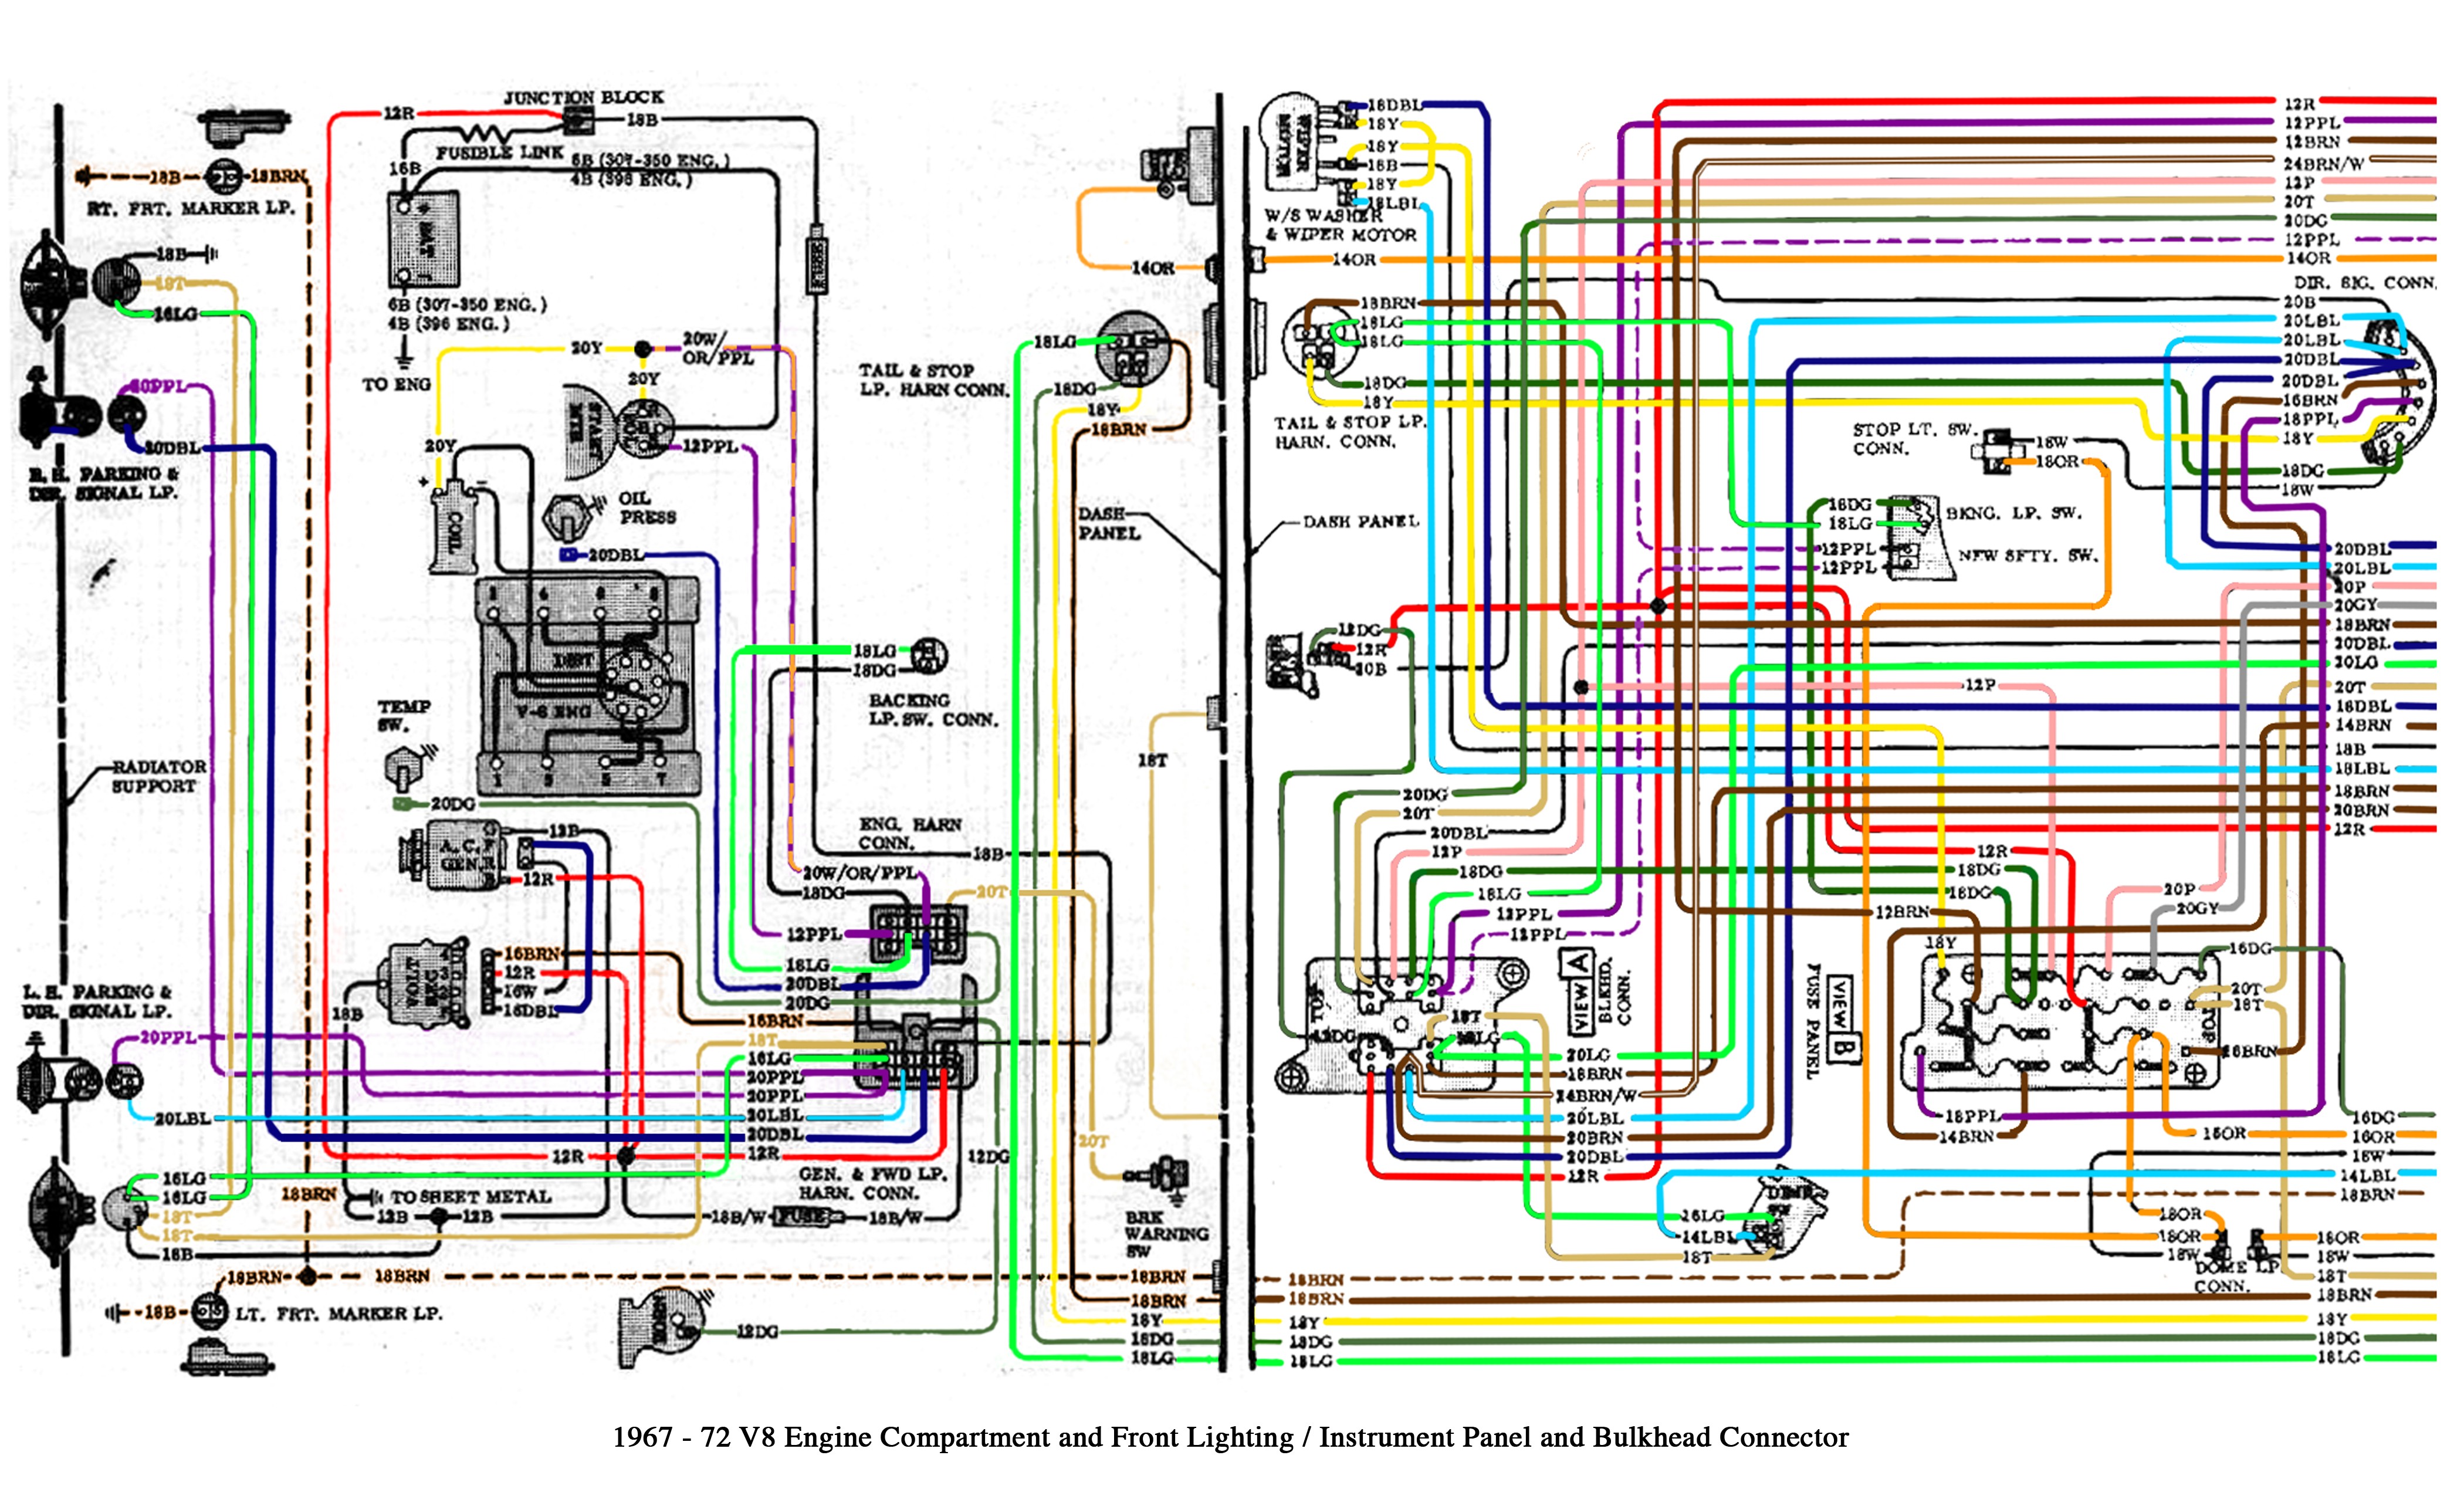 84 Chevy Truck Wiring Diagram 1967 Chevy Truck Wiring Diagram Schema Wiring Diagram Of 84 Chevy Truck Wiring Diagram